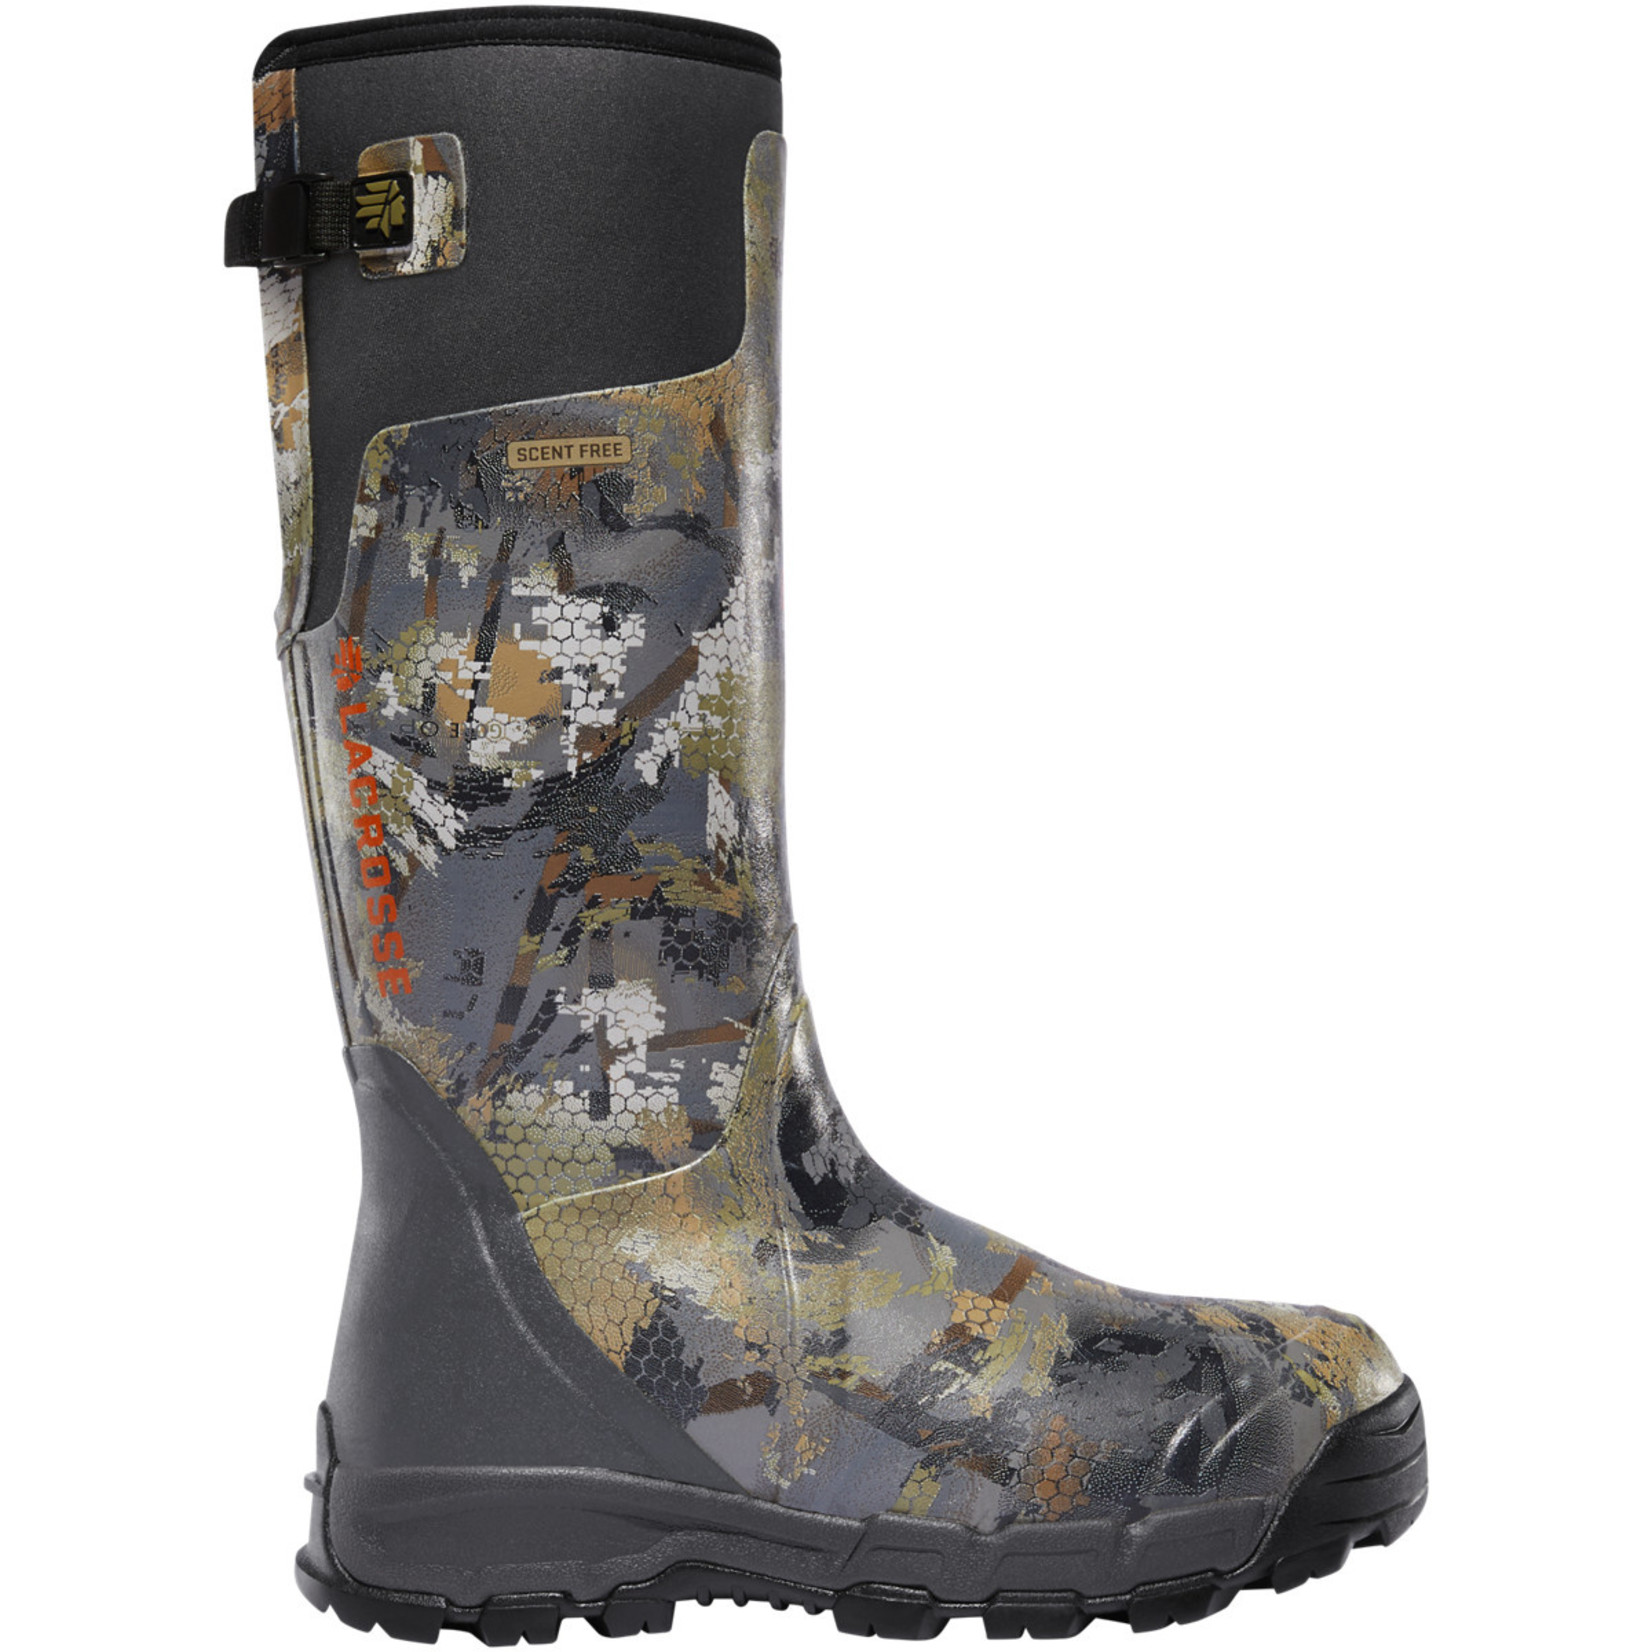 LaCrosse Lacrosse 18” Alphaburly Pro 800G Men’s Hunting Boots